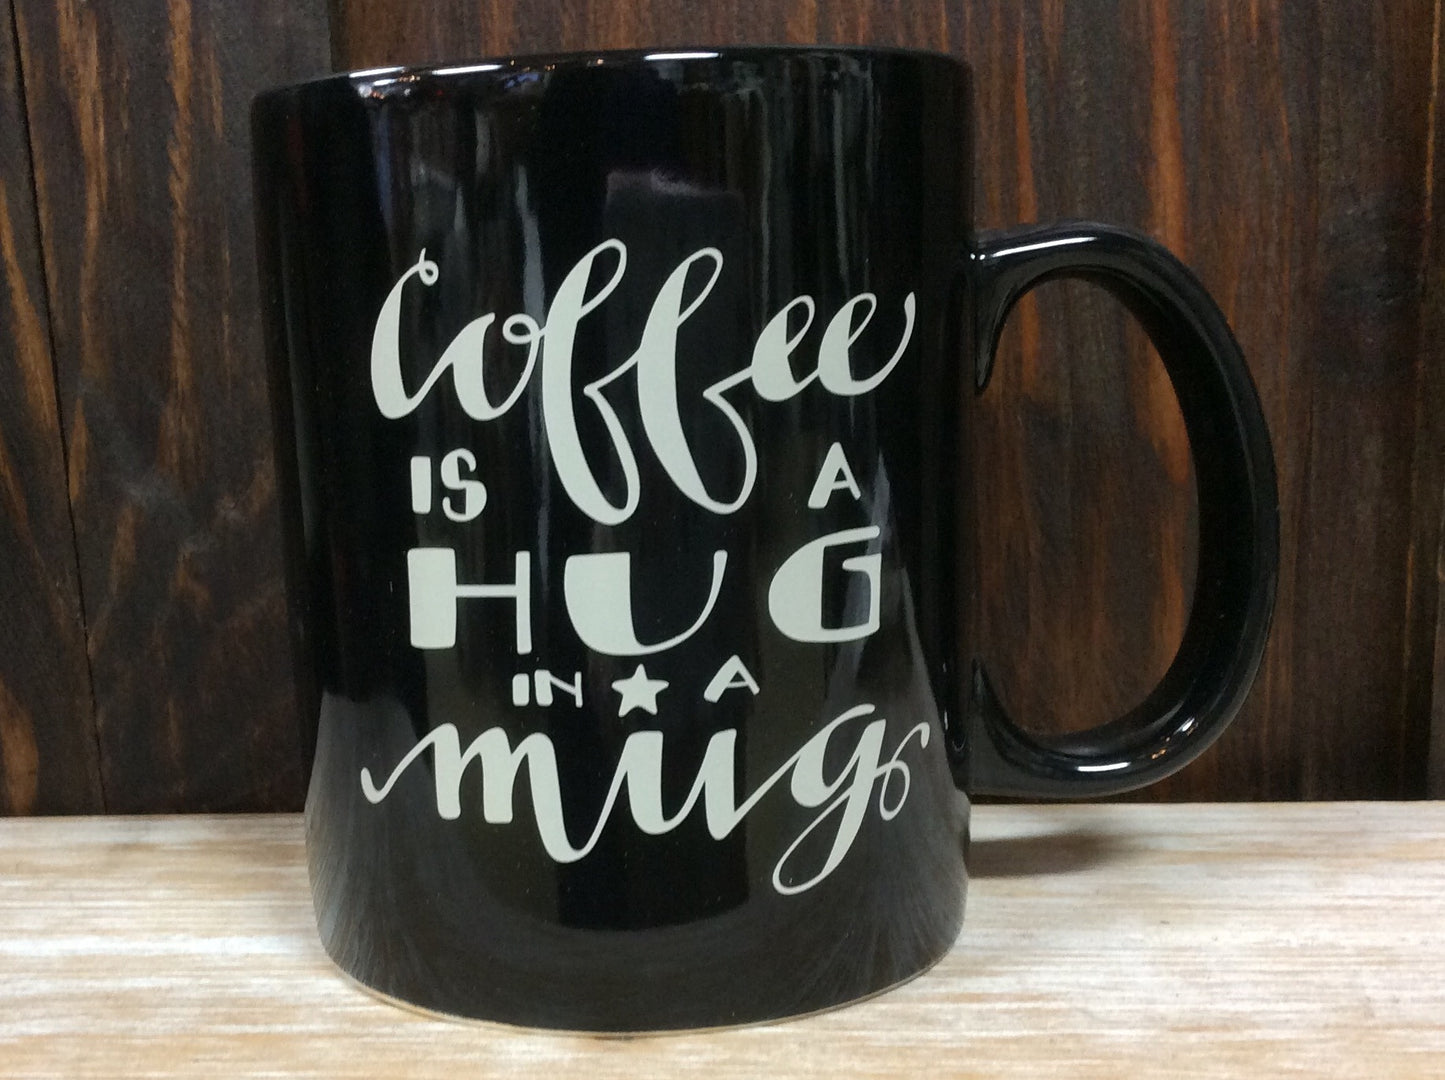 "HUG IN A MUG" COFFEE MUG